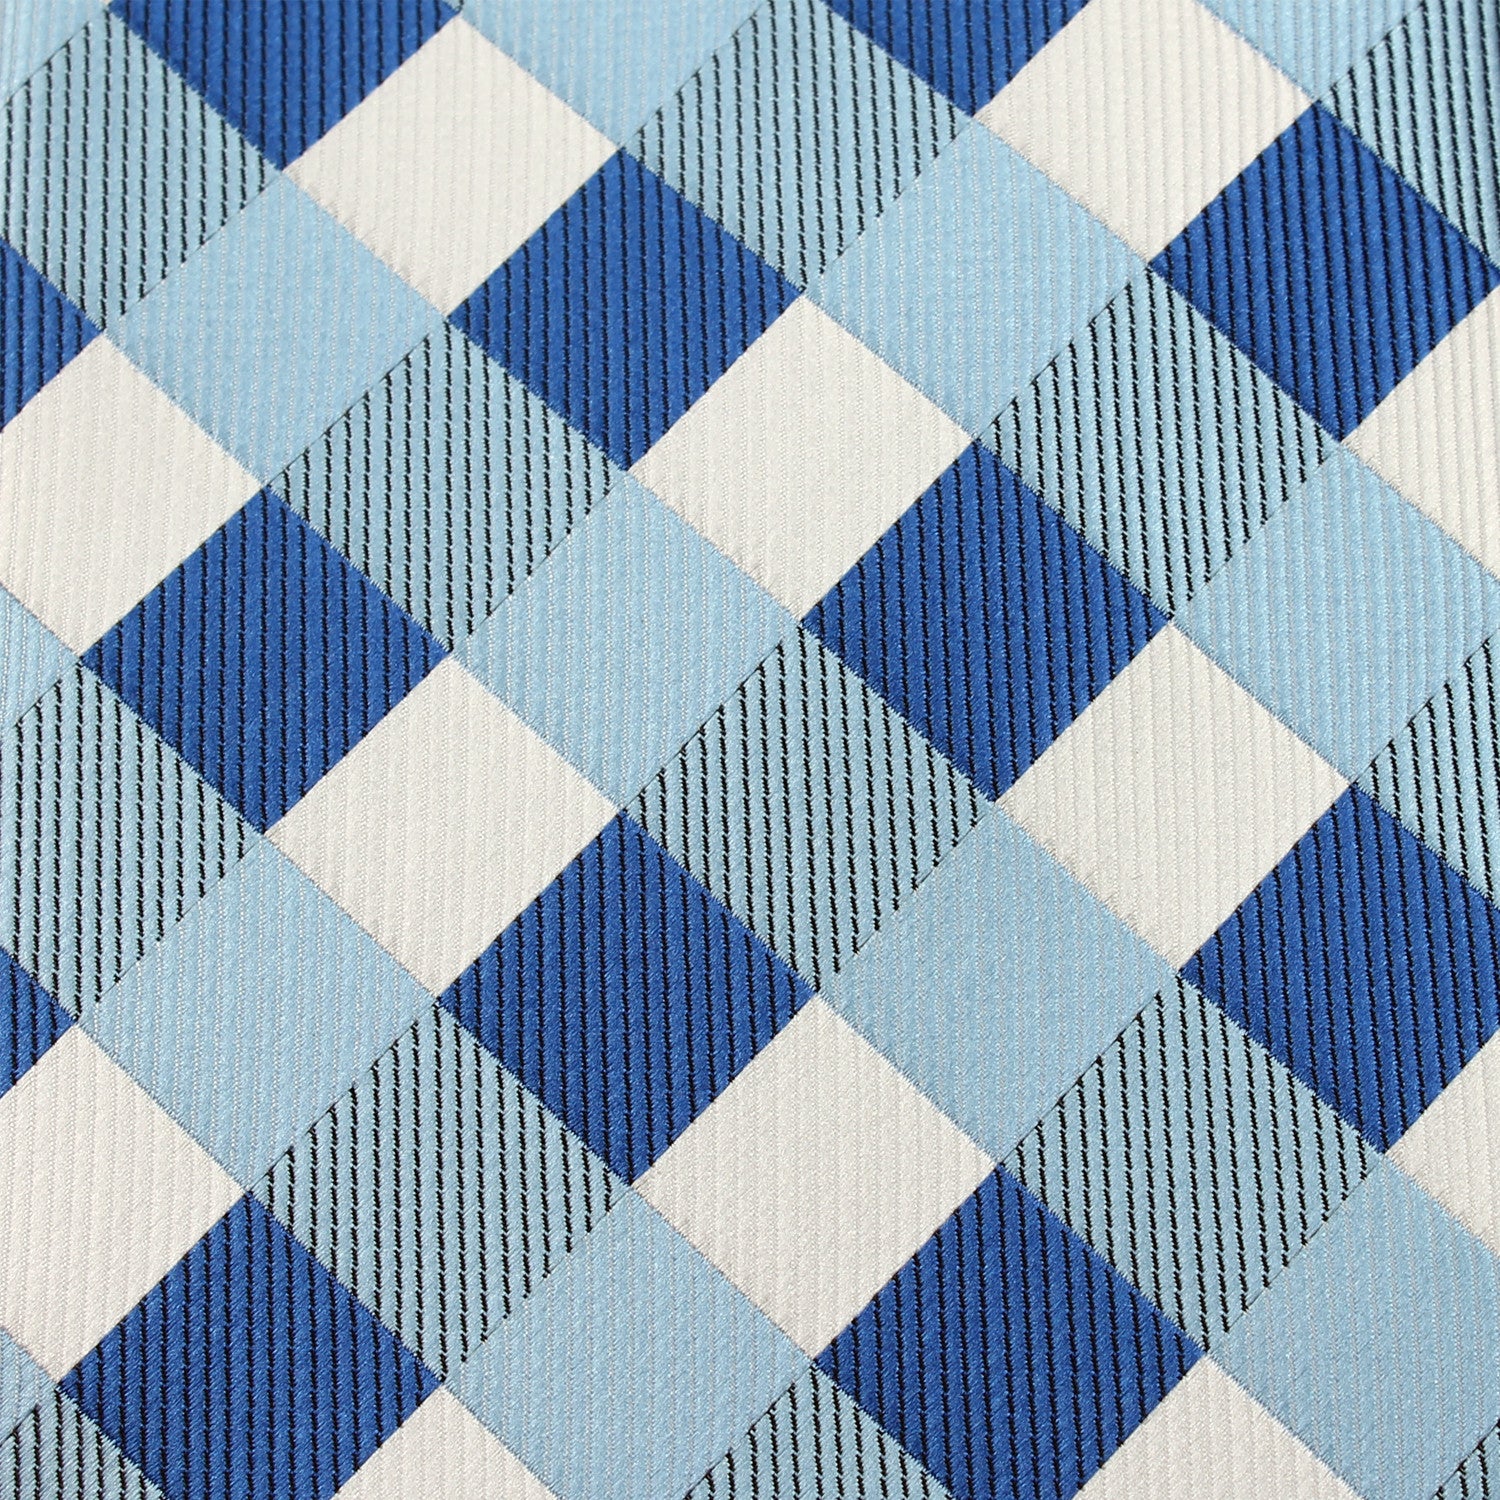 Blue Checkered Tie Fabric